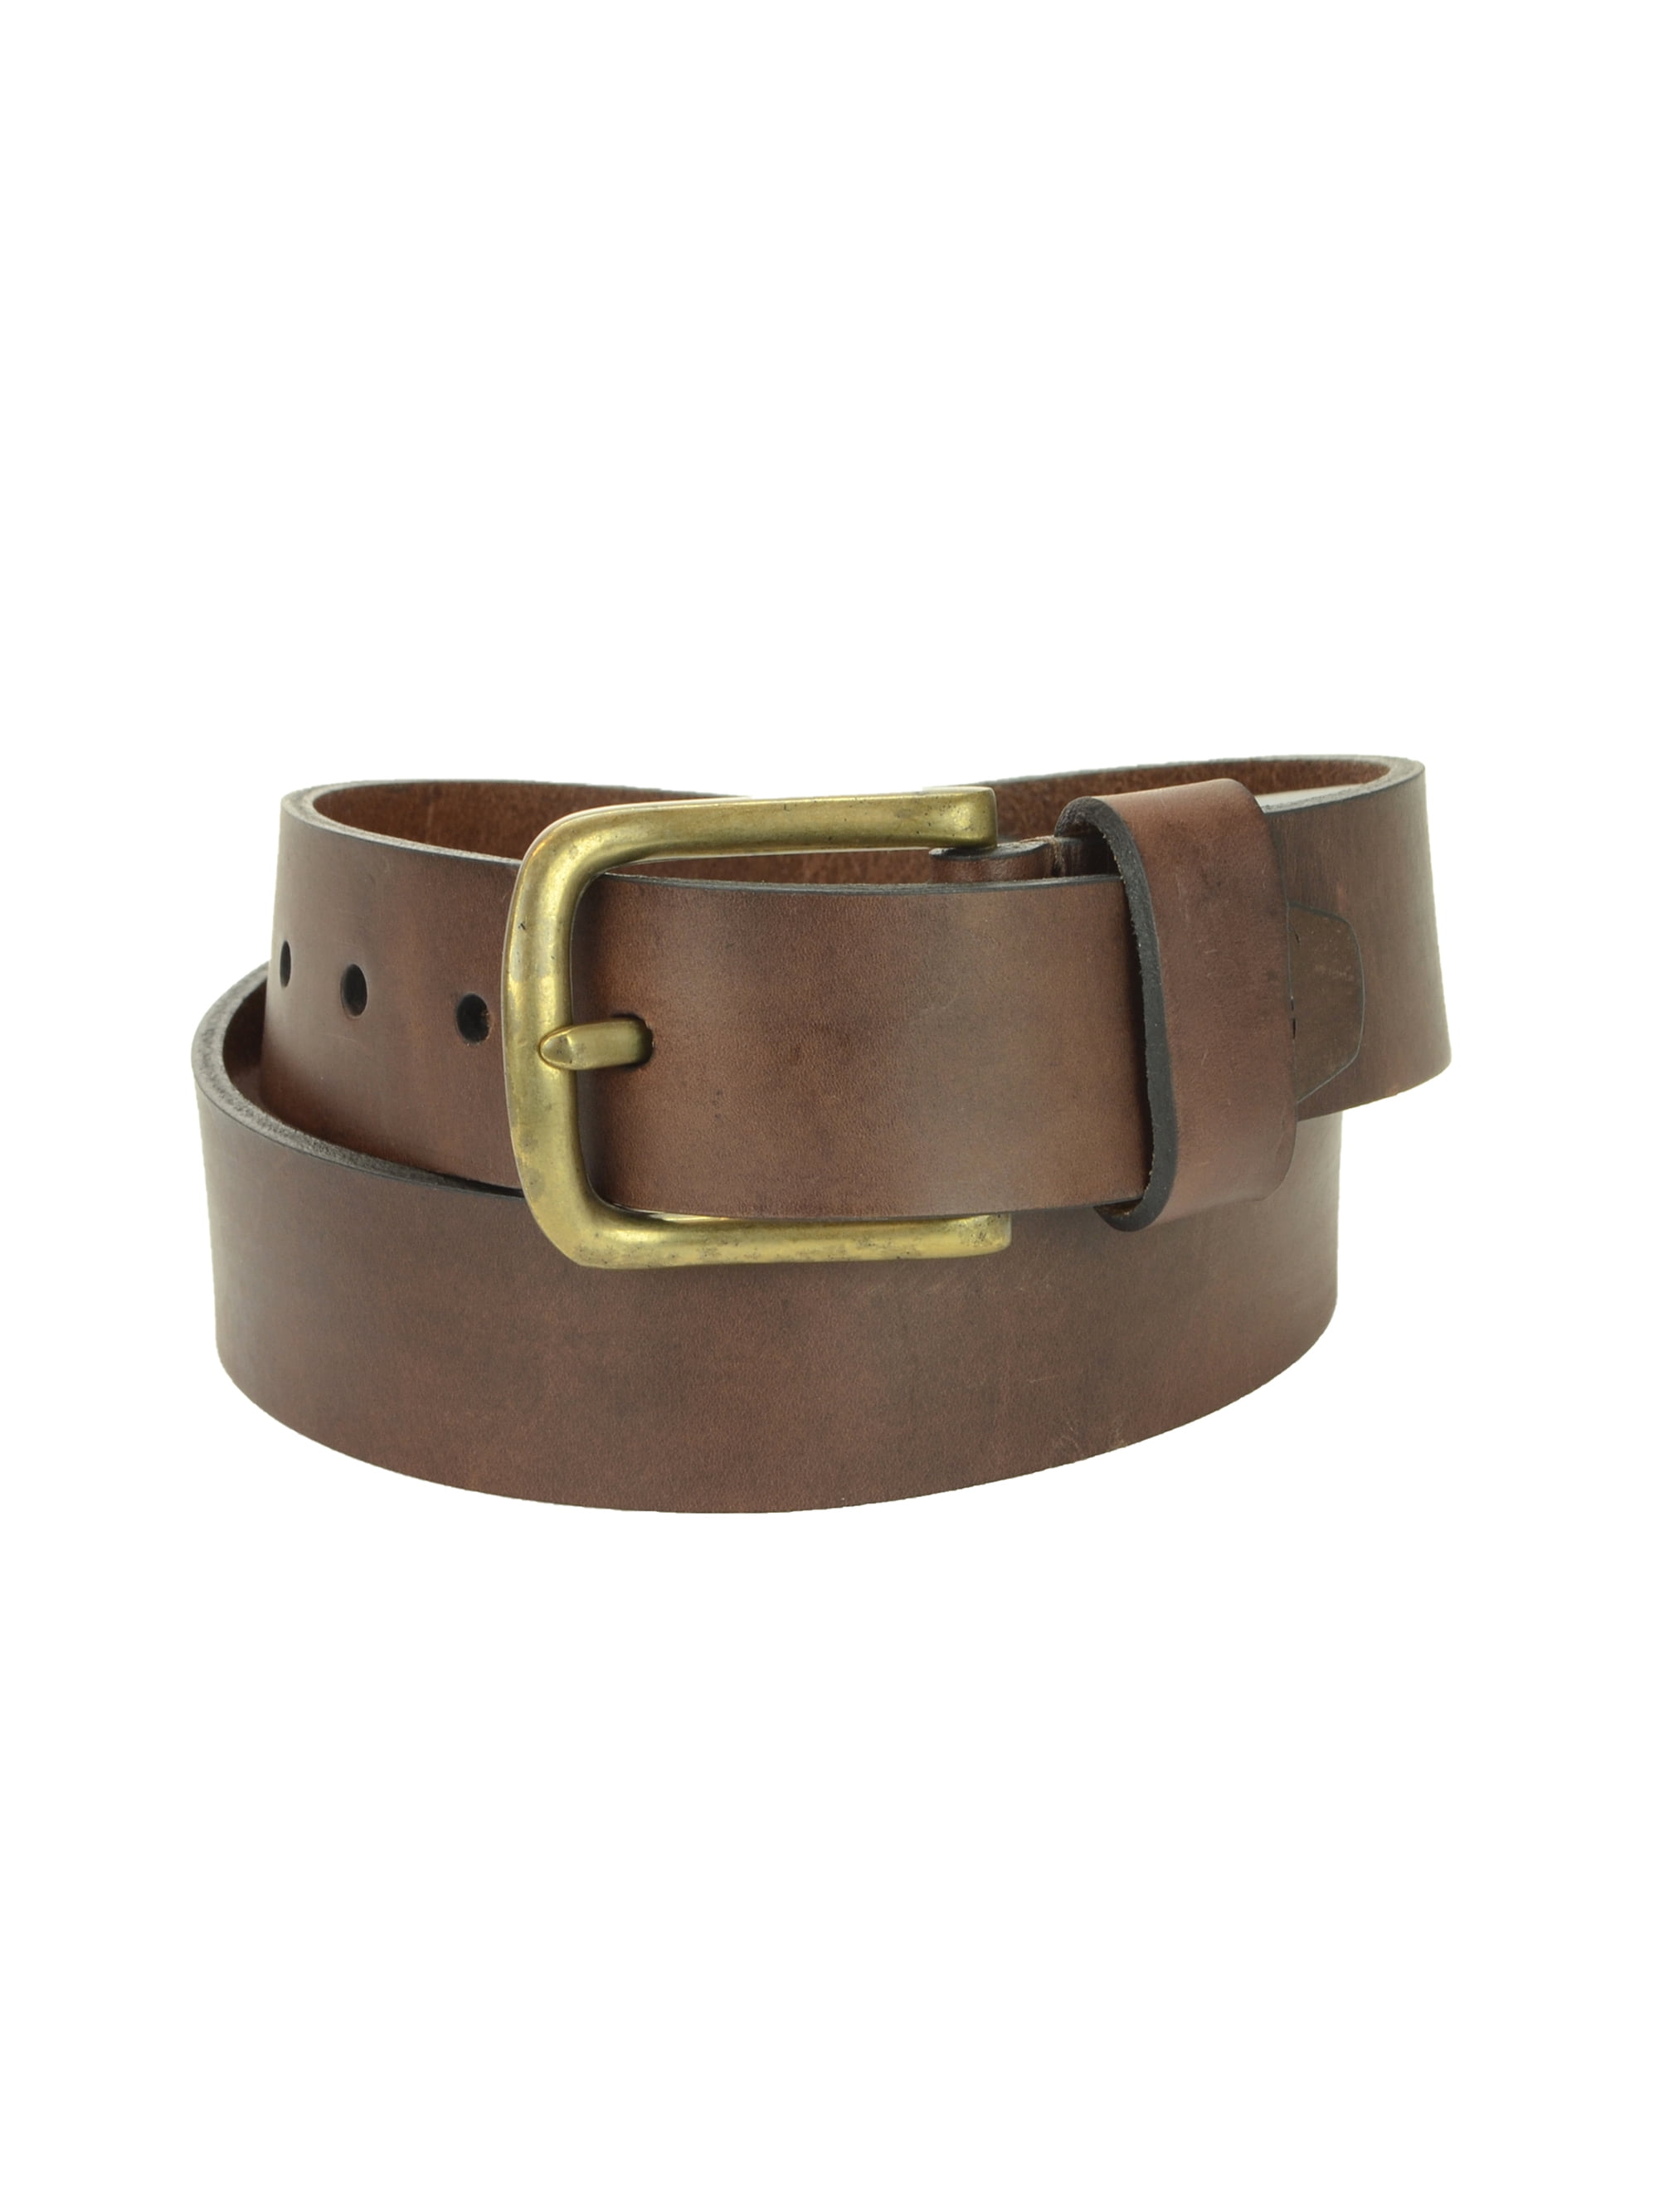 Chestnut Brown Belt with Antique Brass Curved Buckle - Walmart.com